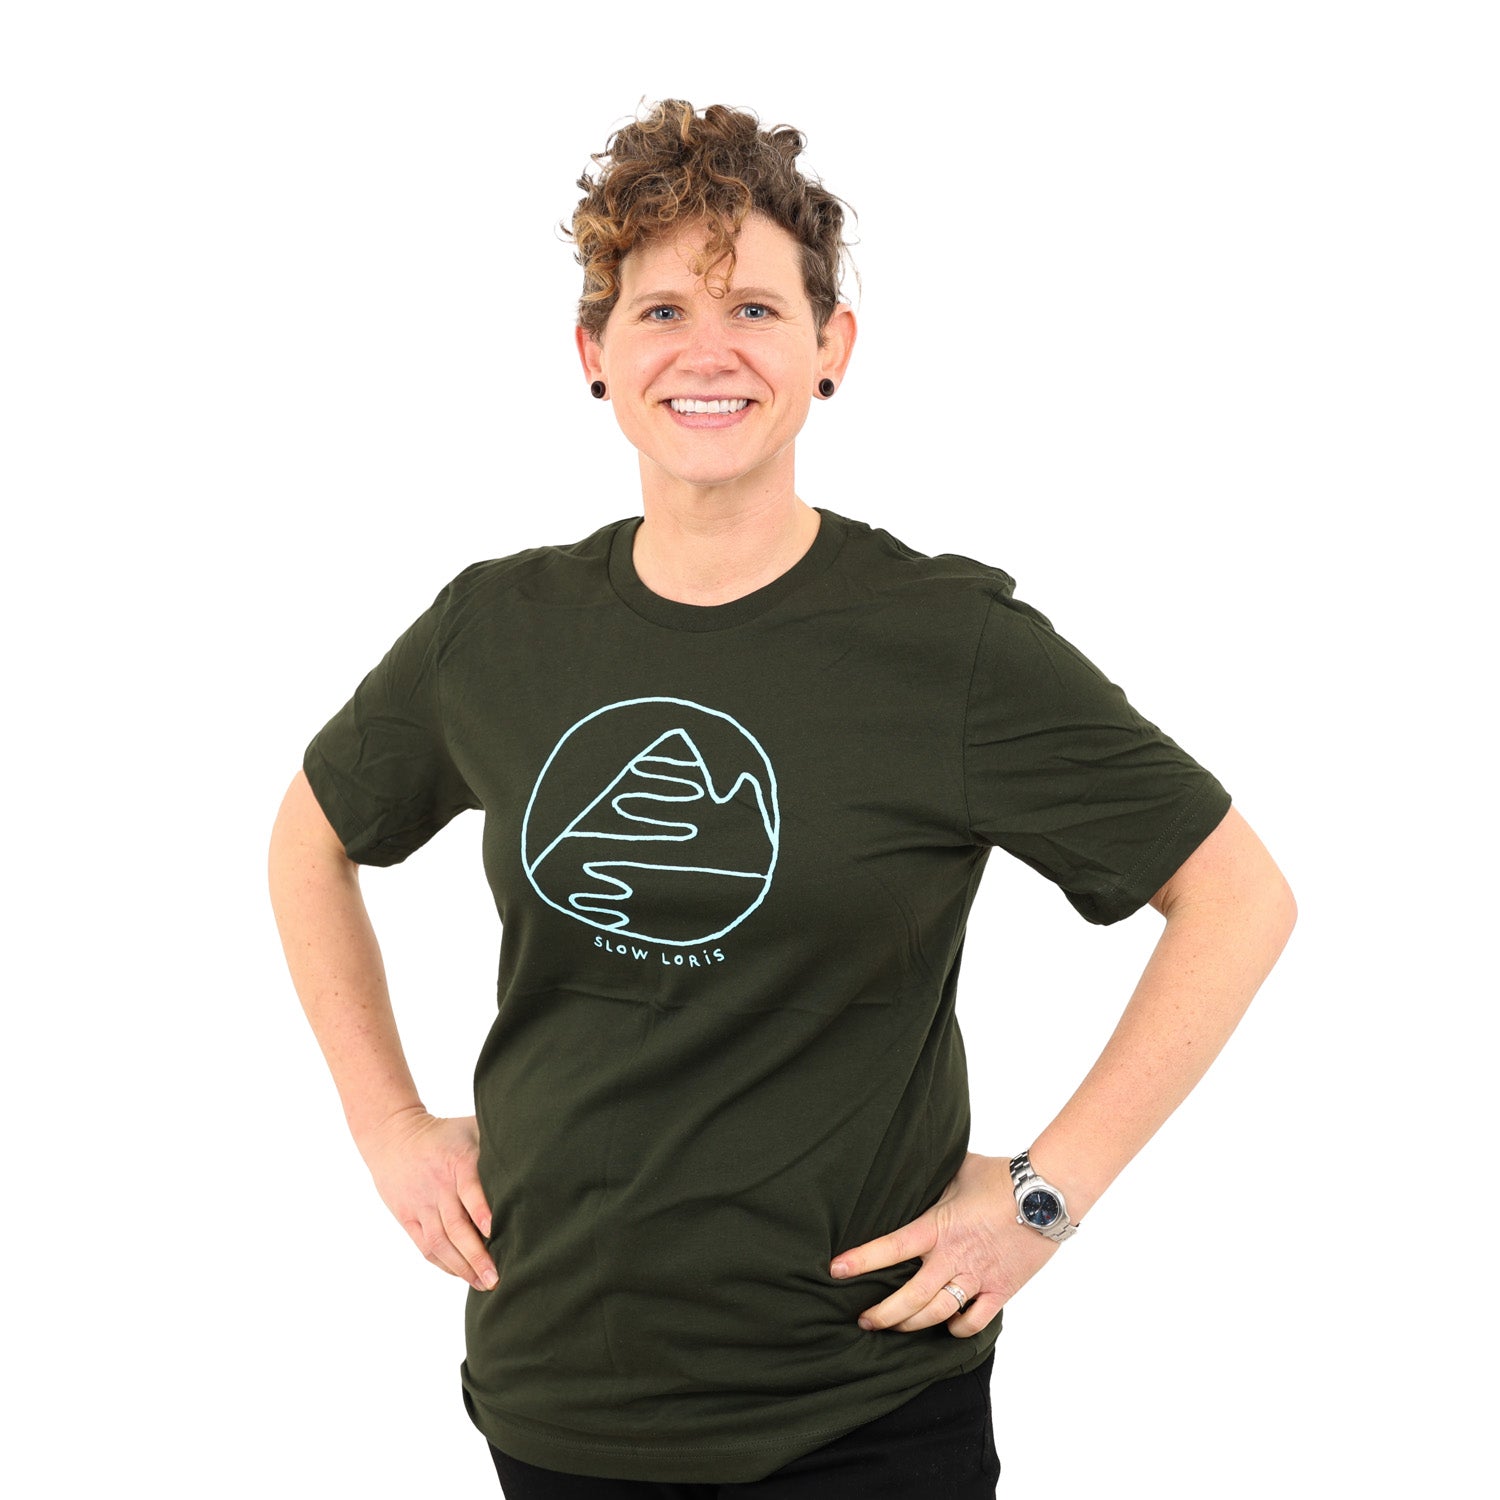 Woman wearing dark green t-shirt with light blue ink of the Slow Loris mountain hug design.